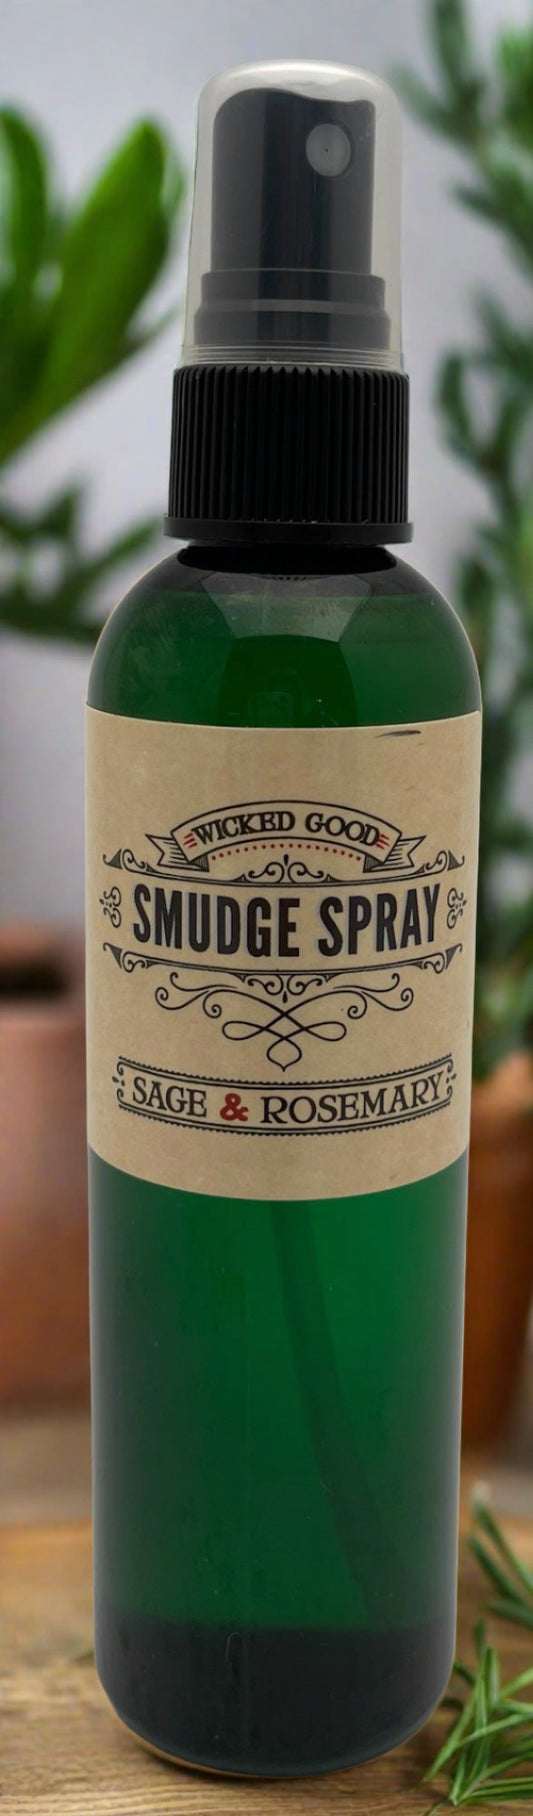 Wicked Good Smudge Spray: Sage Rosemary Spray